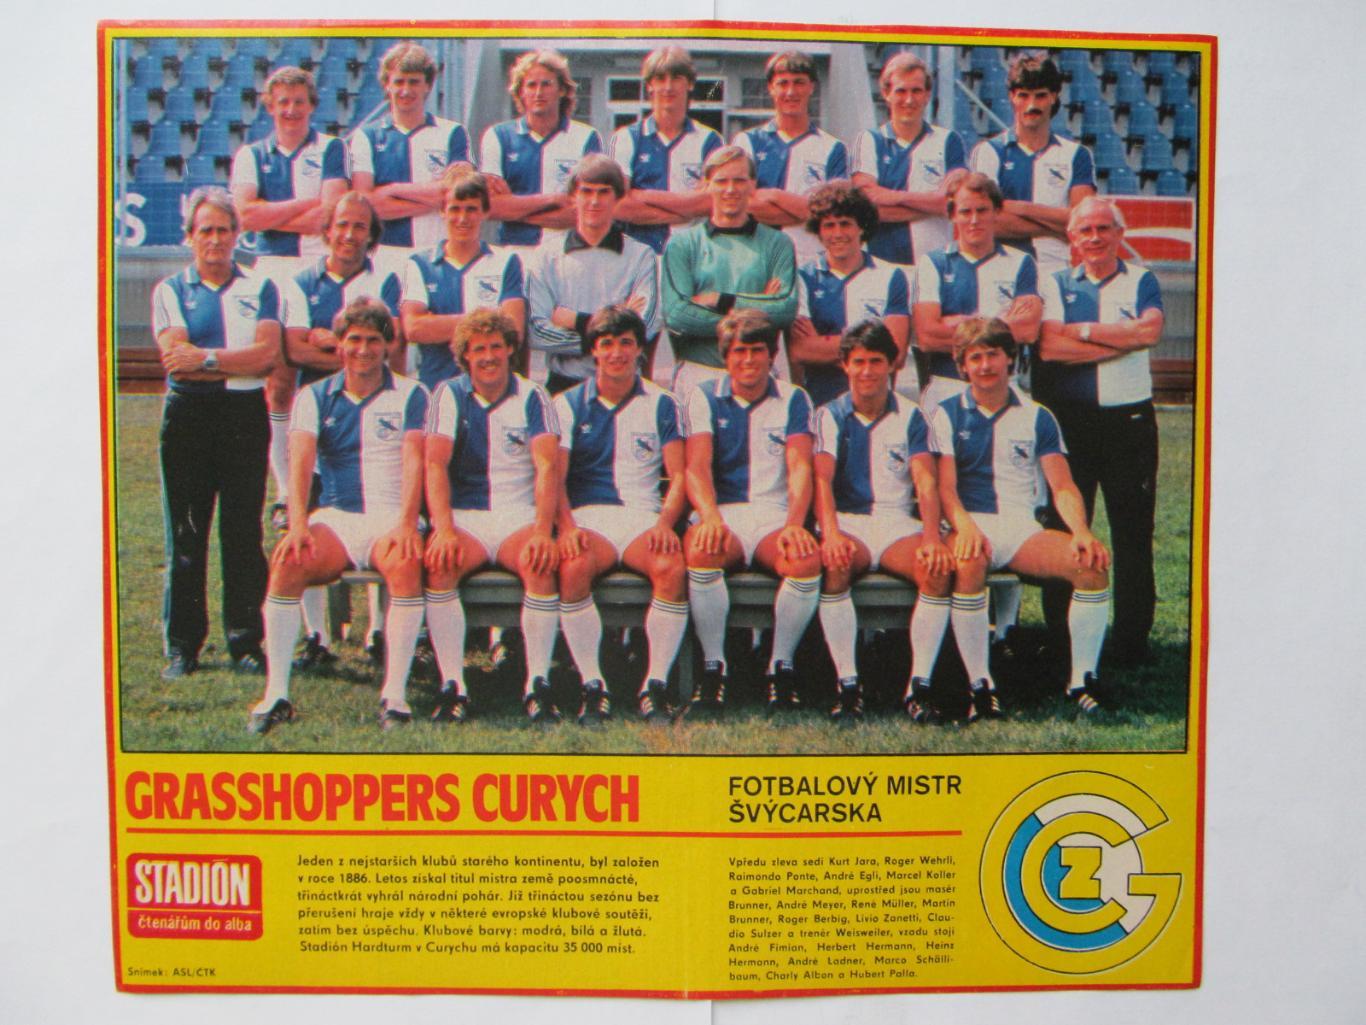 Постер Грассхопперс из журнала Stadion/Стадион 1982г